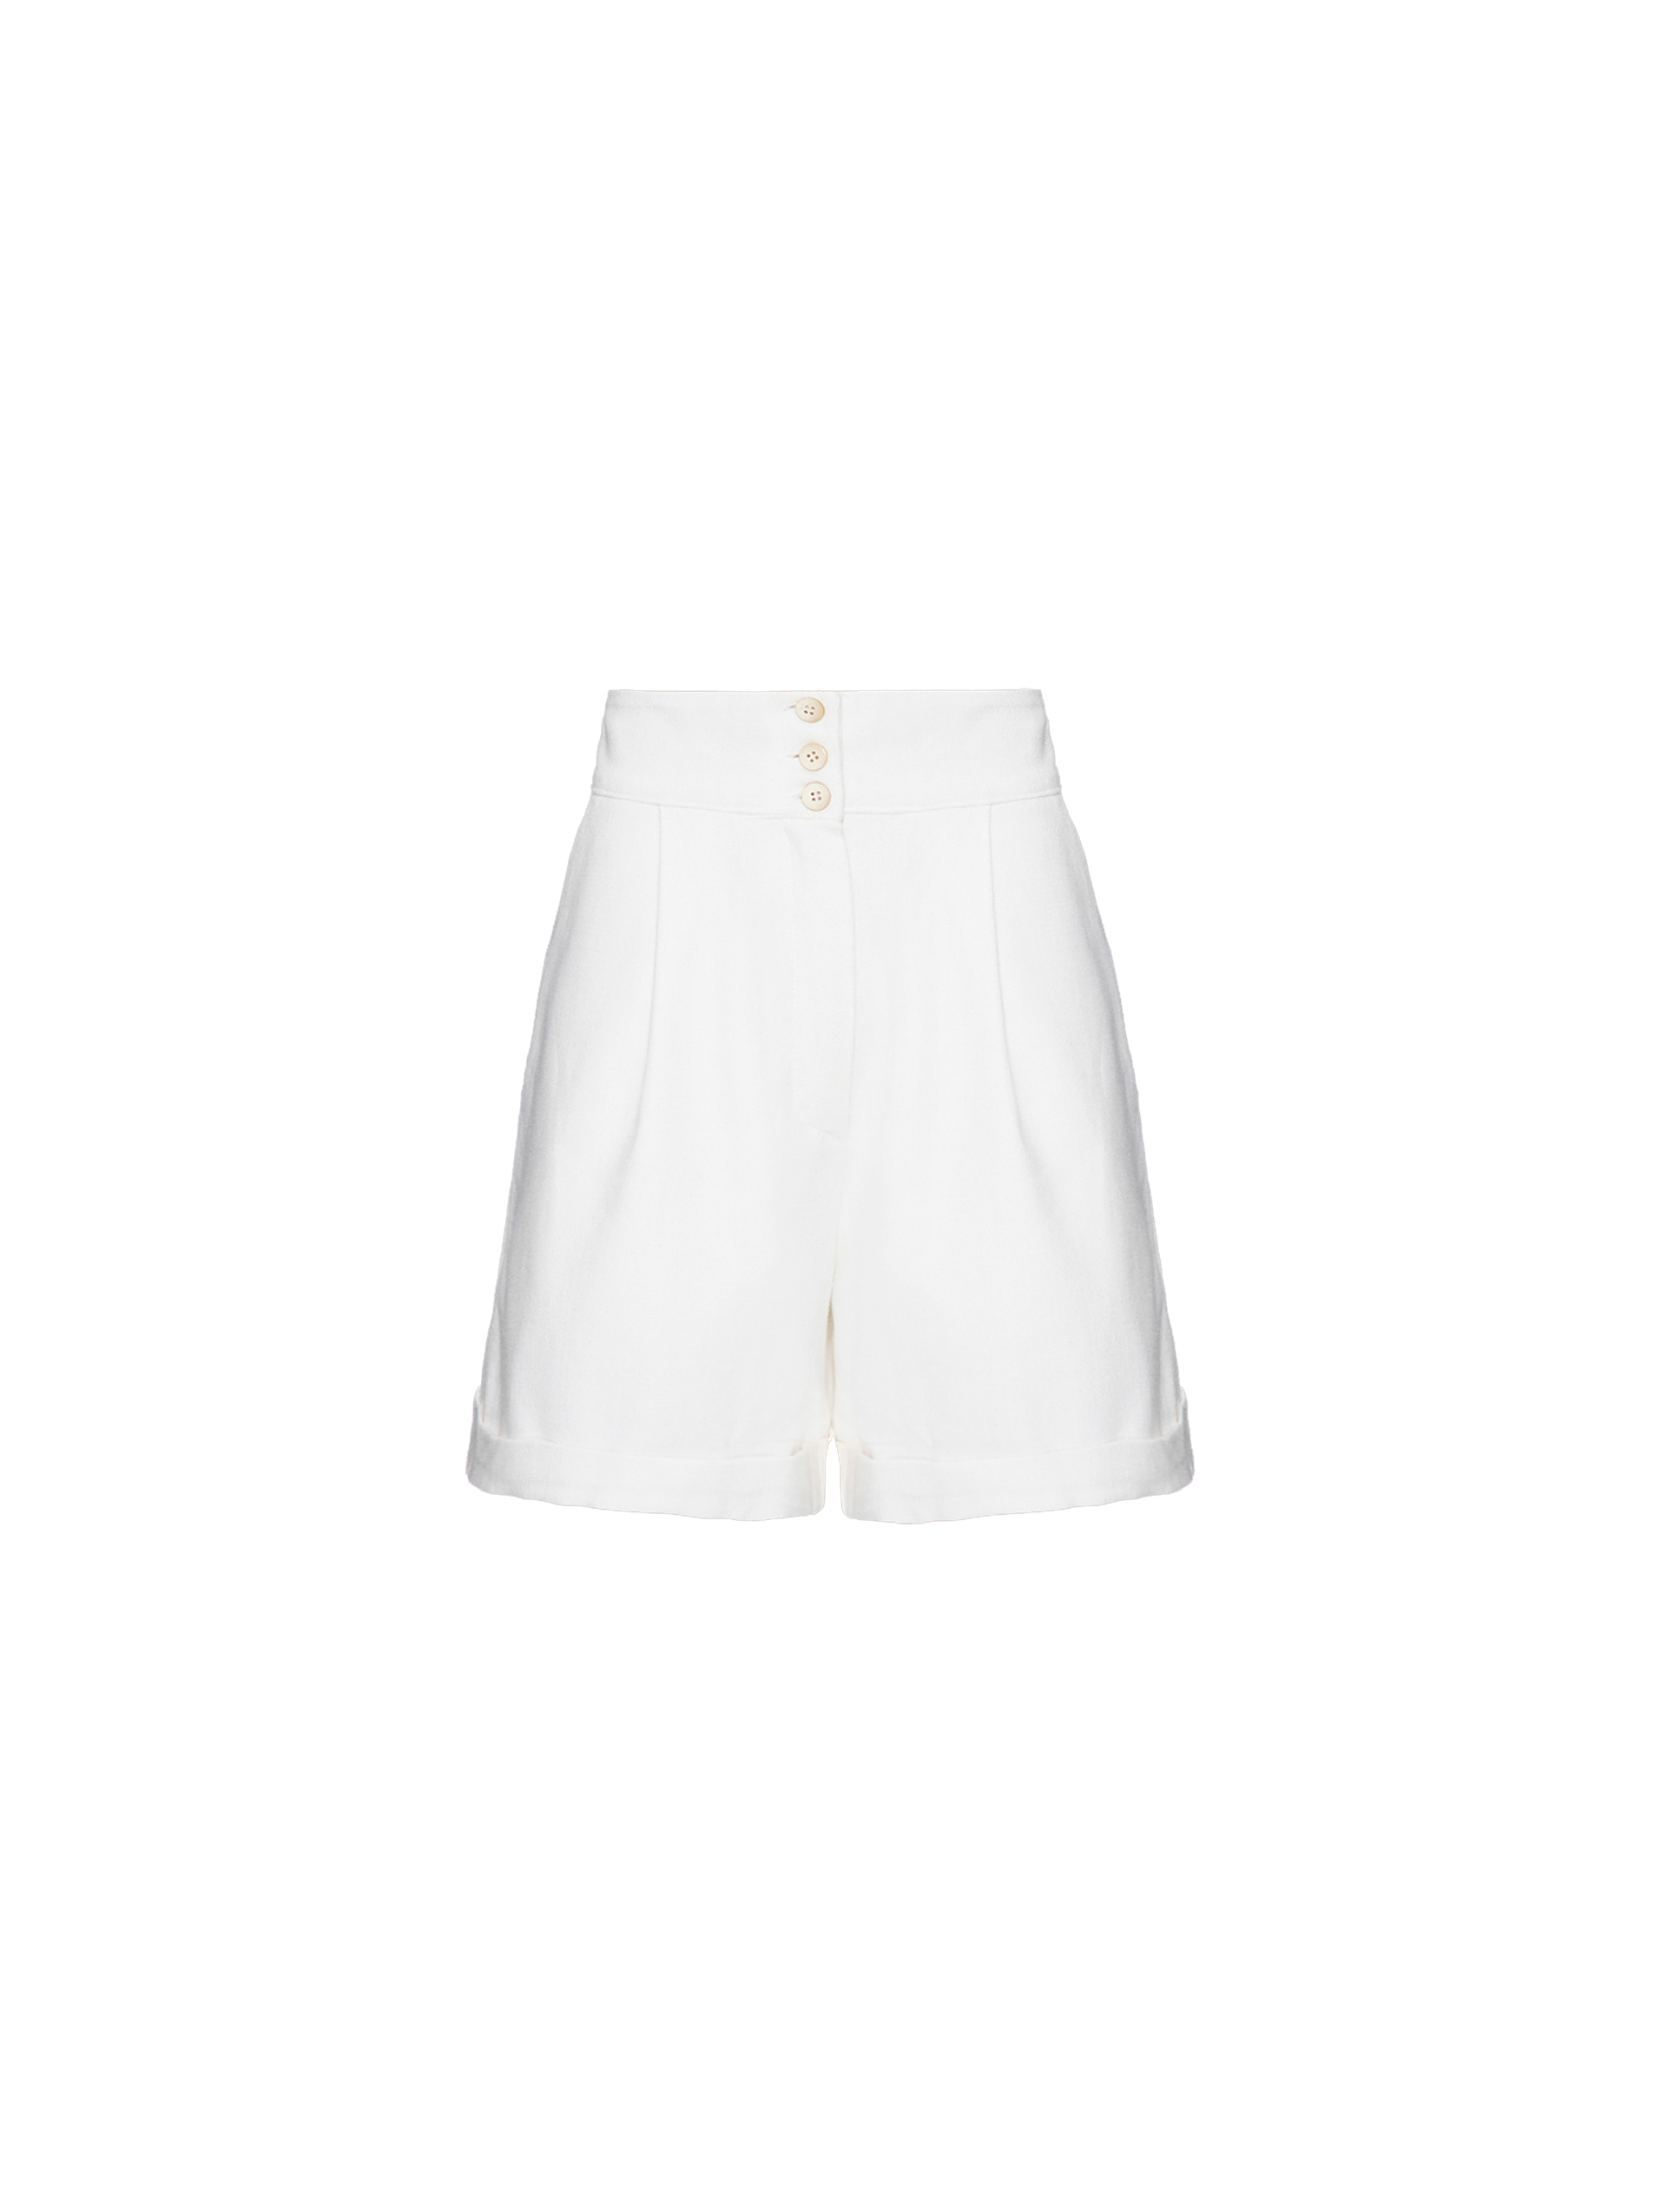 Shorts Brunelle Branco